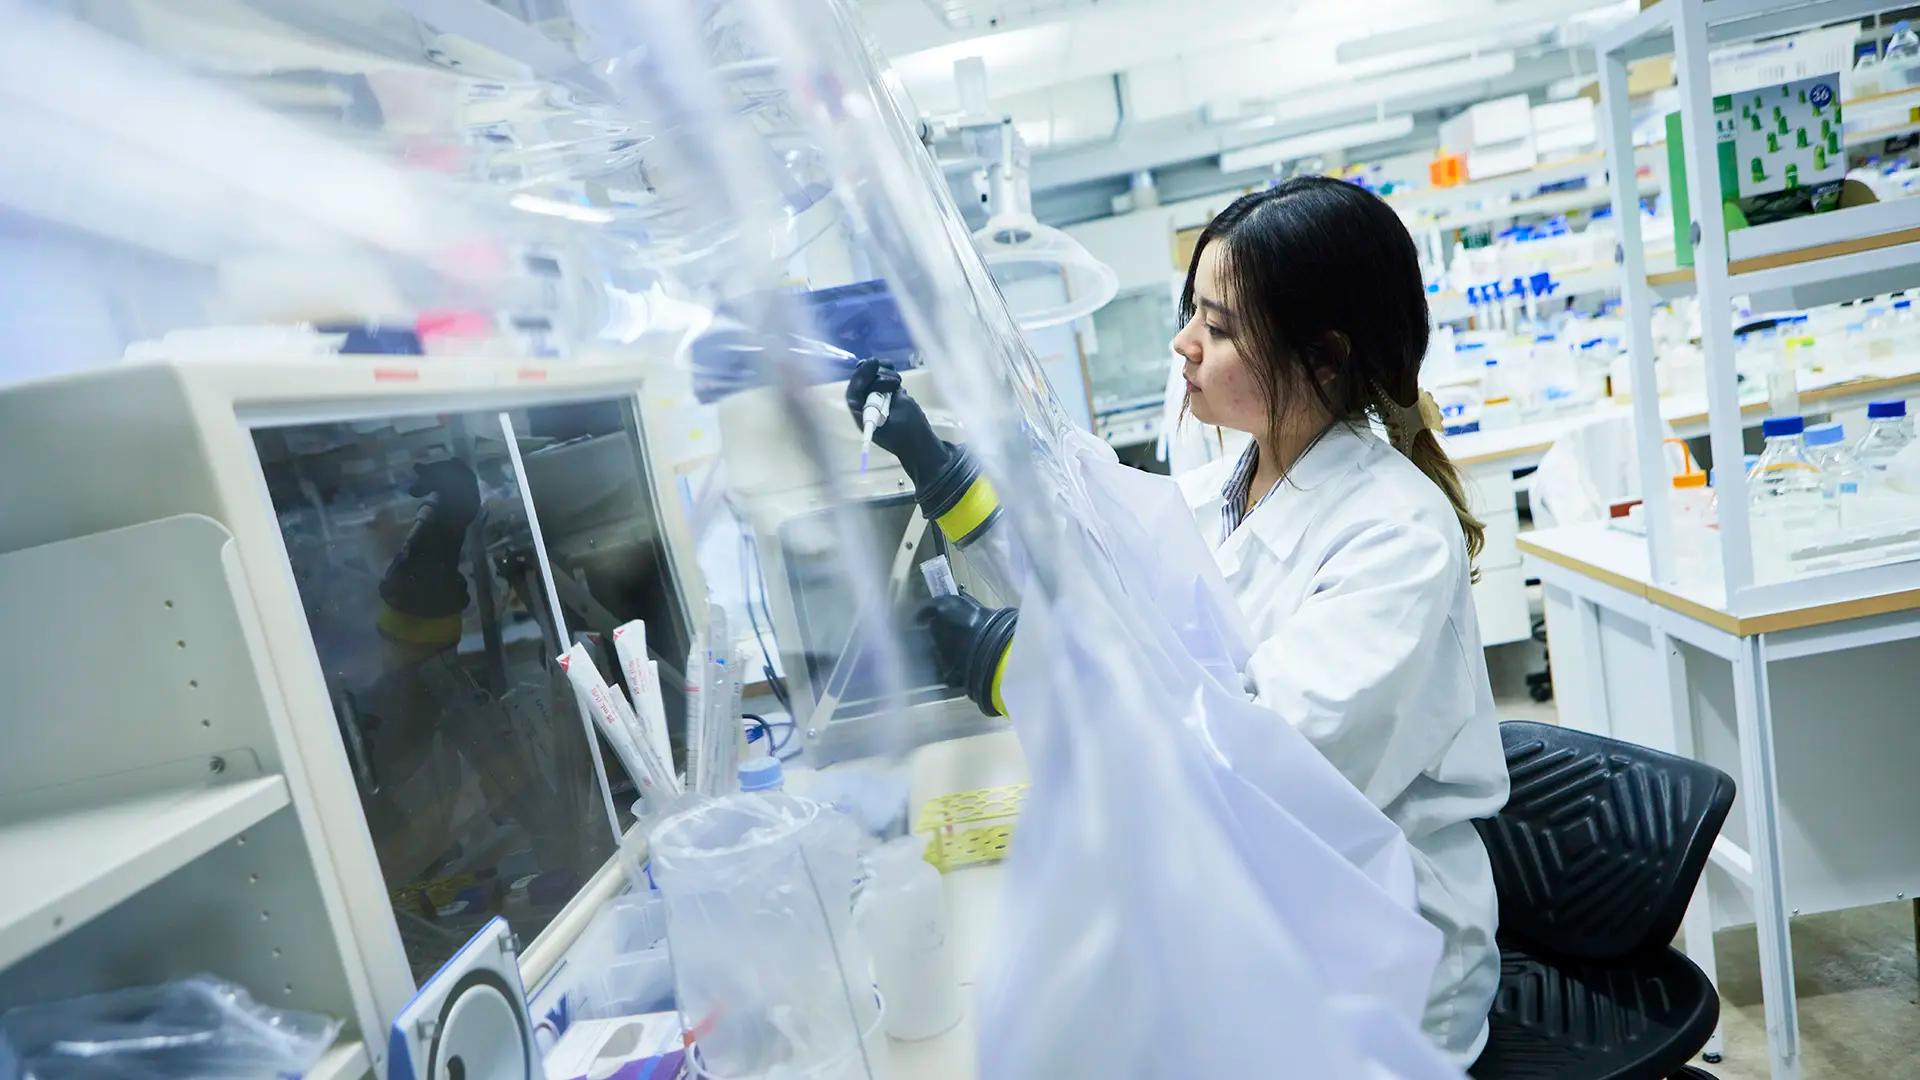 Forskare i labbrock arbetar i ett dragskåp i ett laboratorium